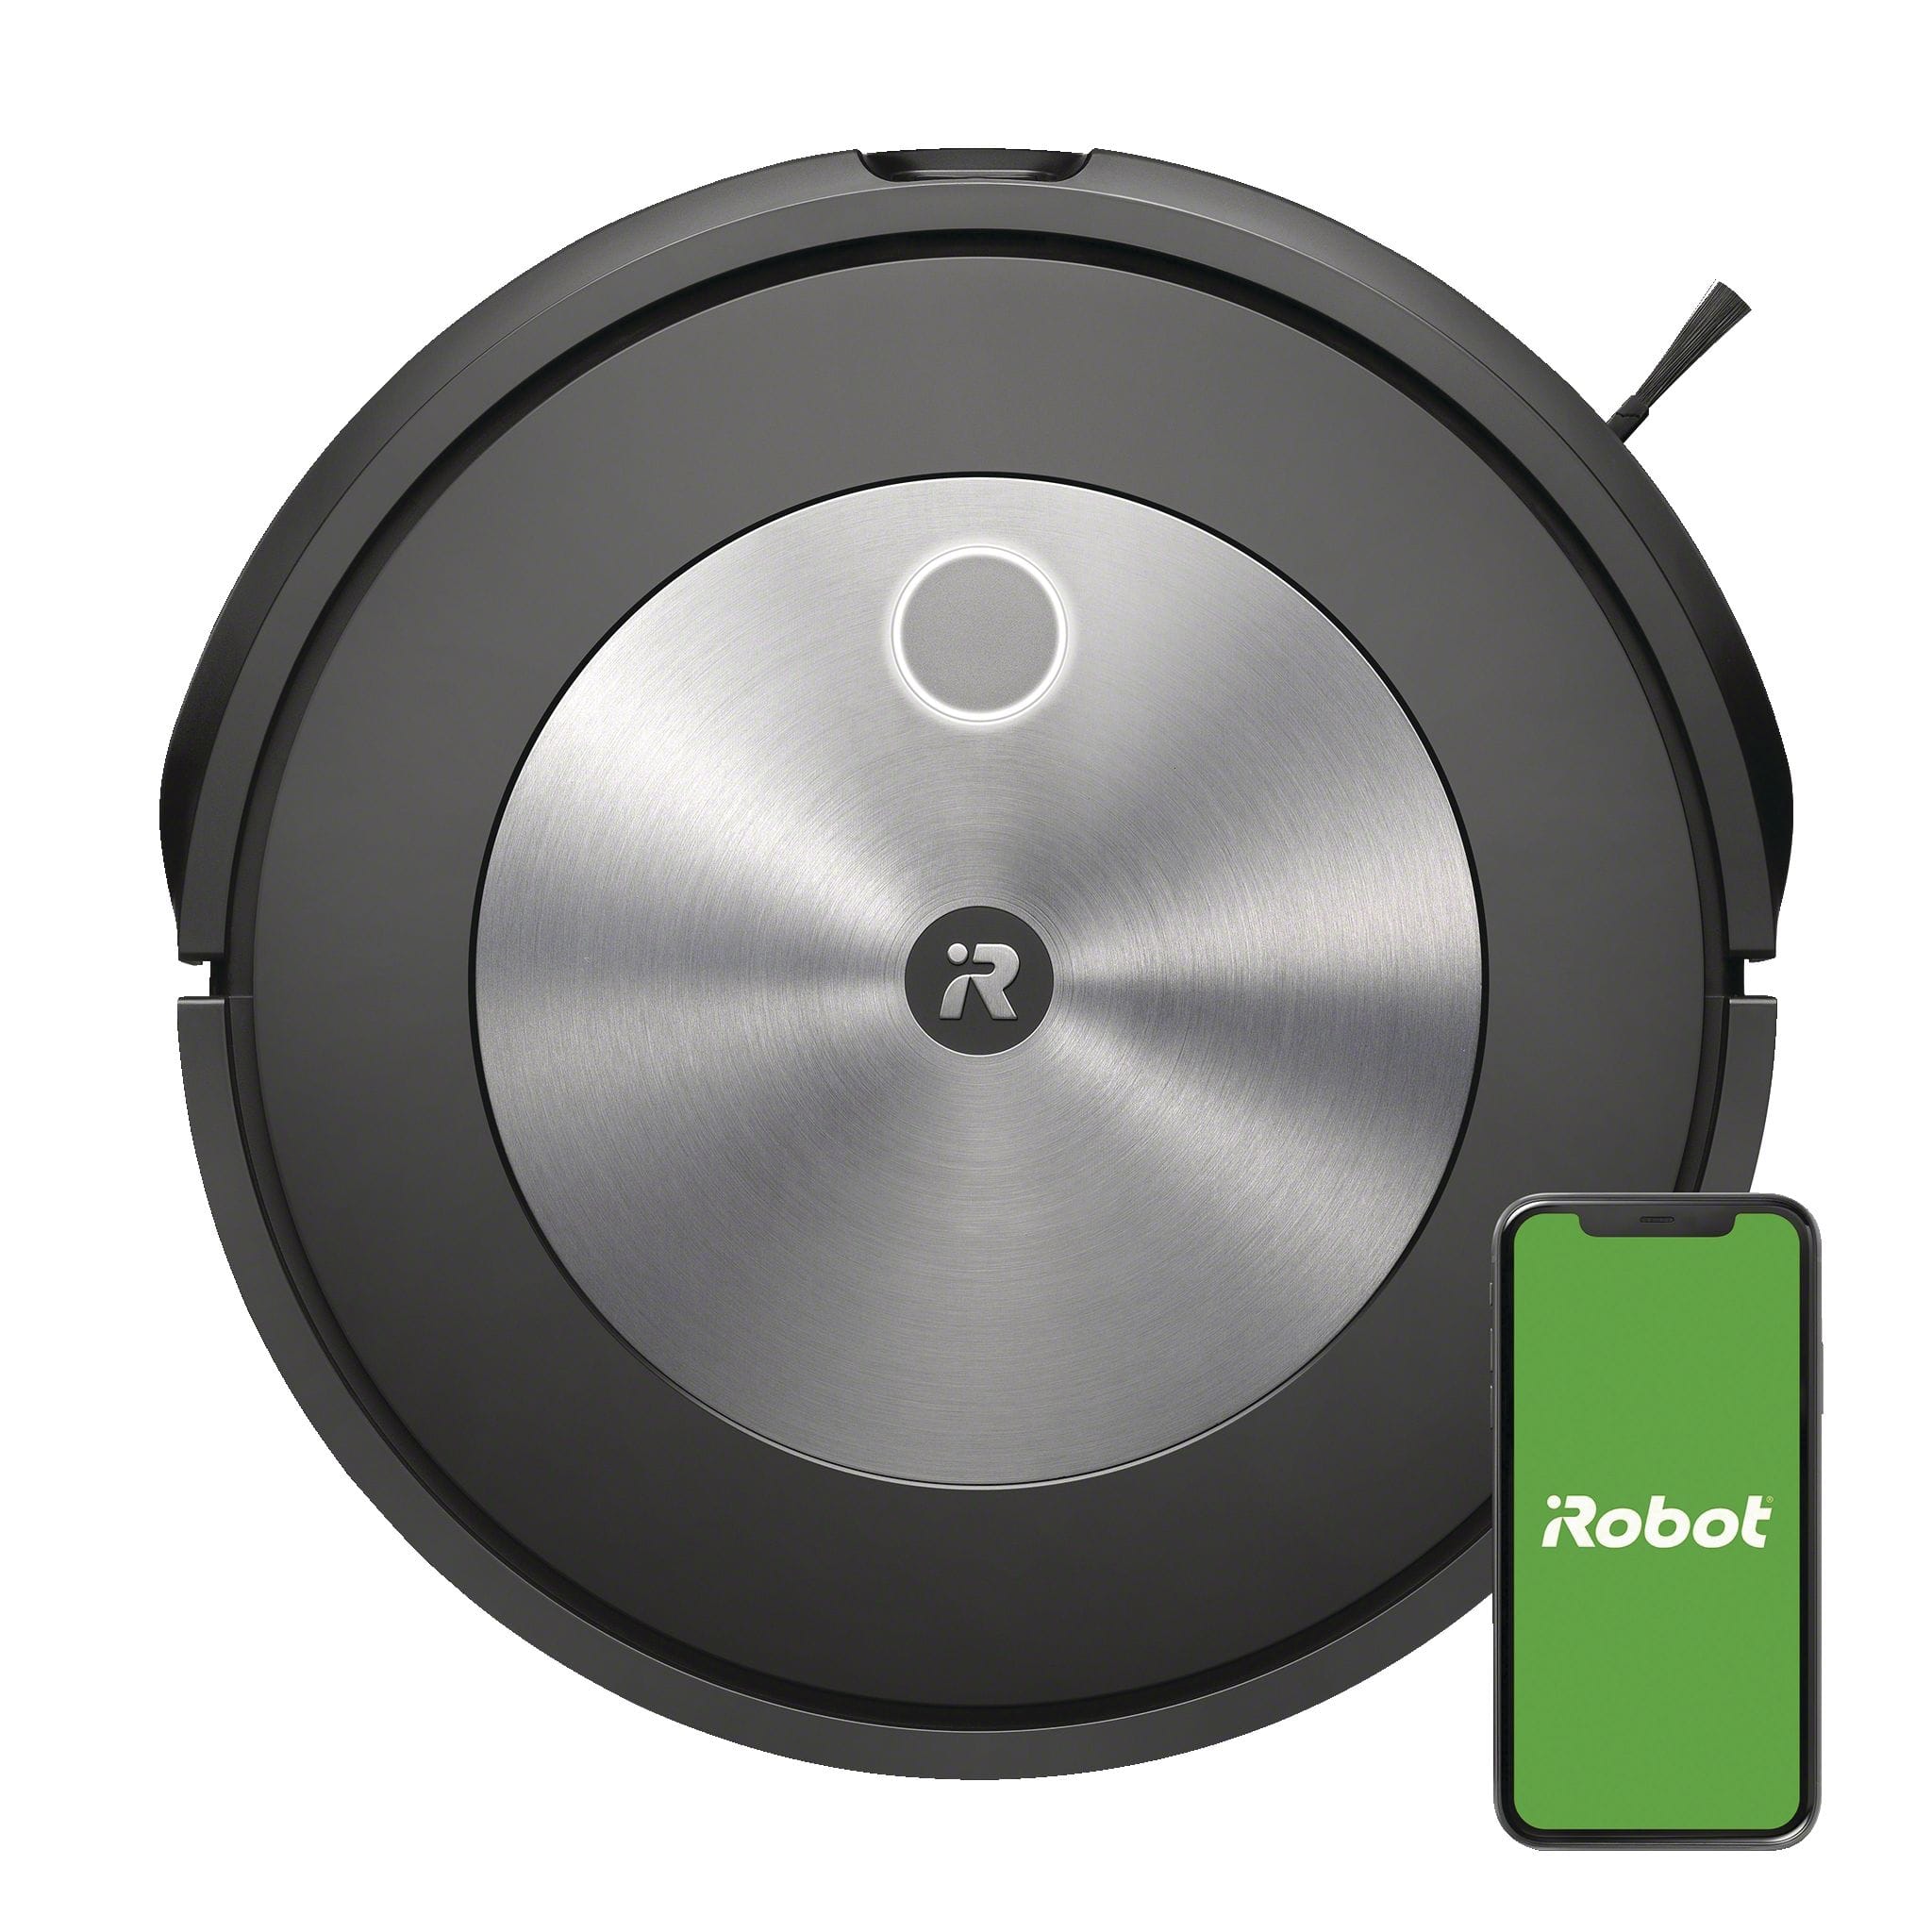 Zone protégée, Roomba® aspirateur robot